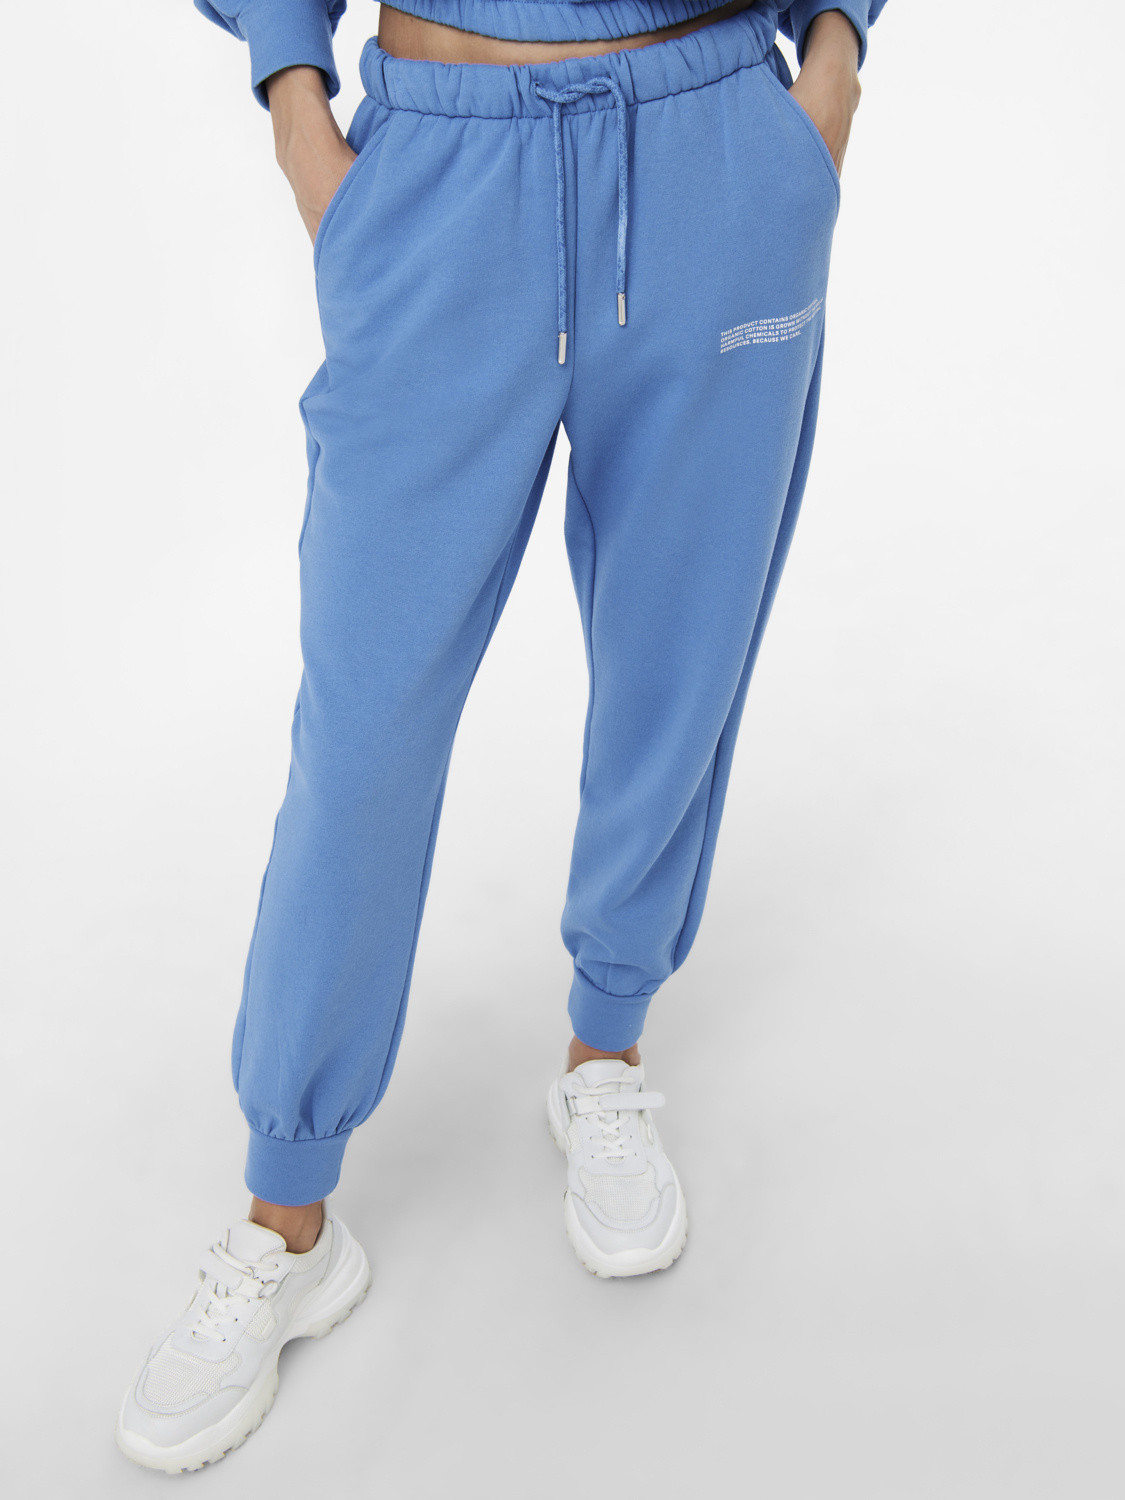 Pantaloni tuta donna, Azzurro, large image number 3